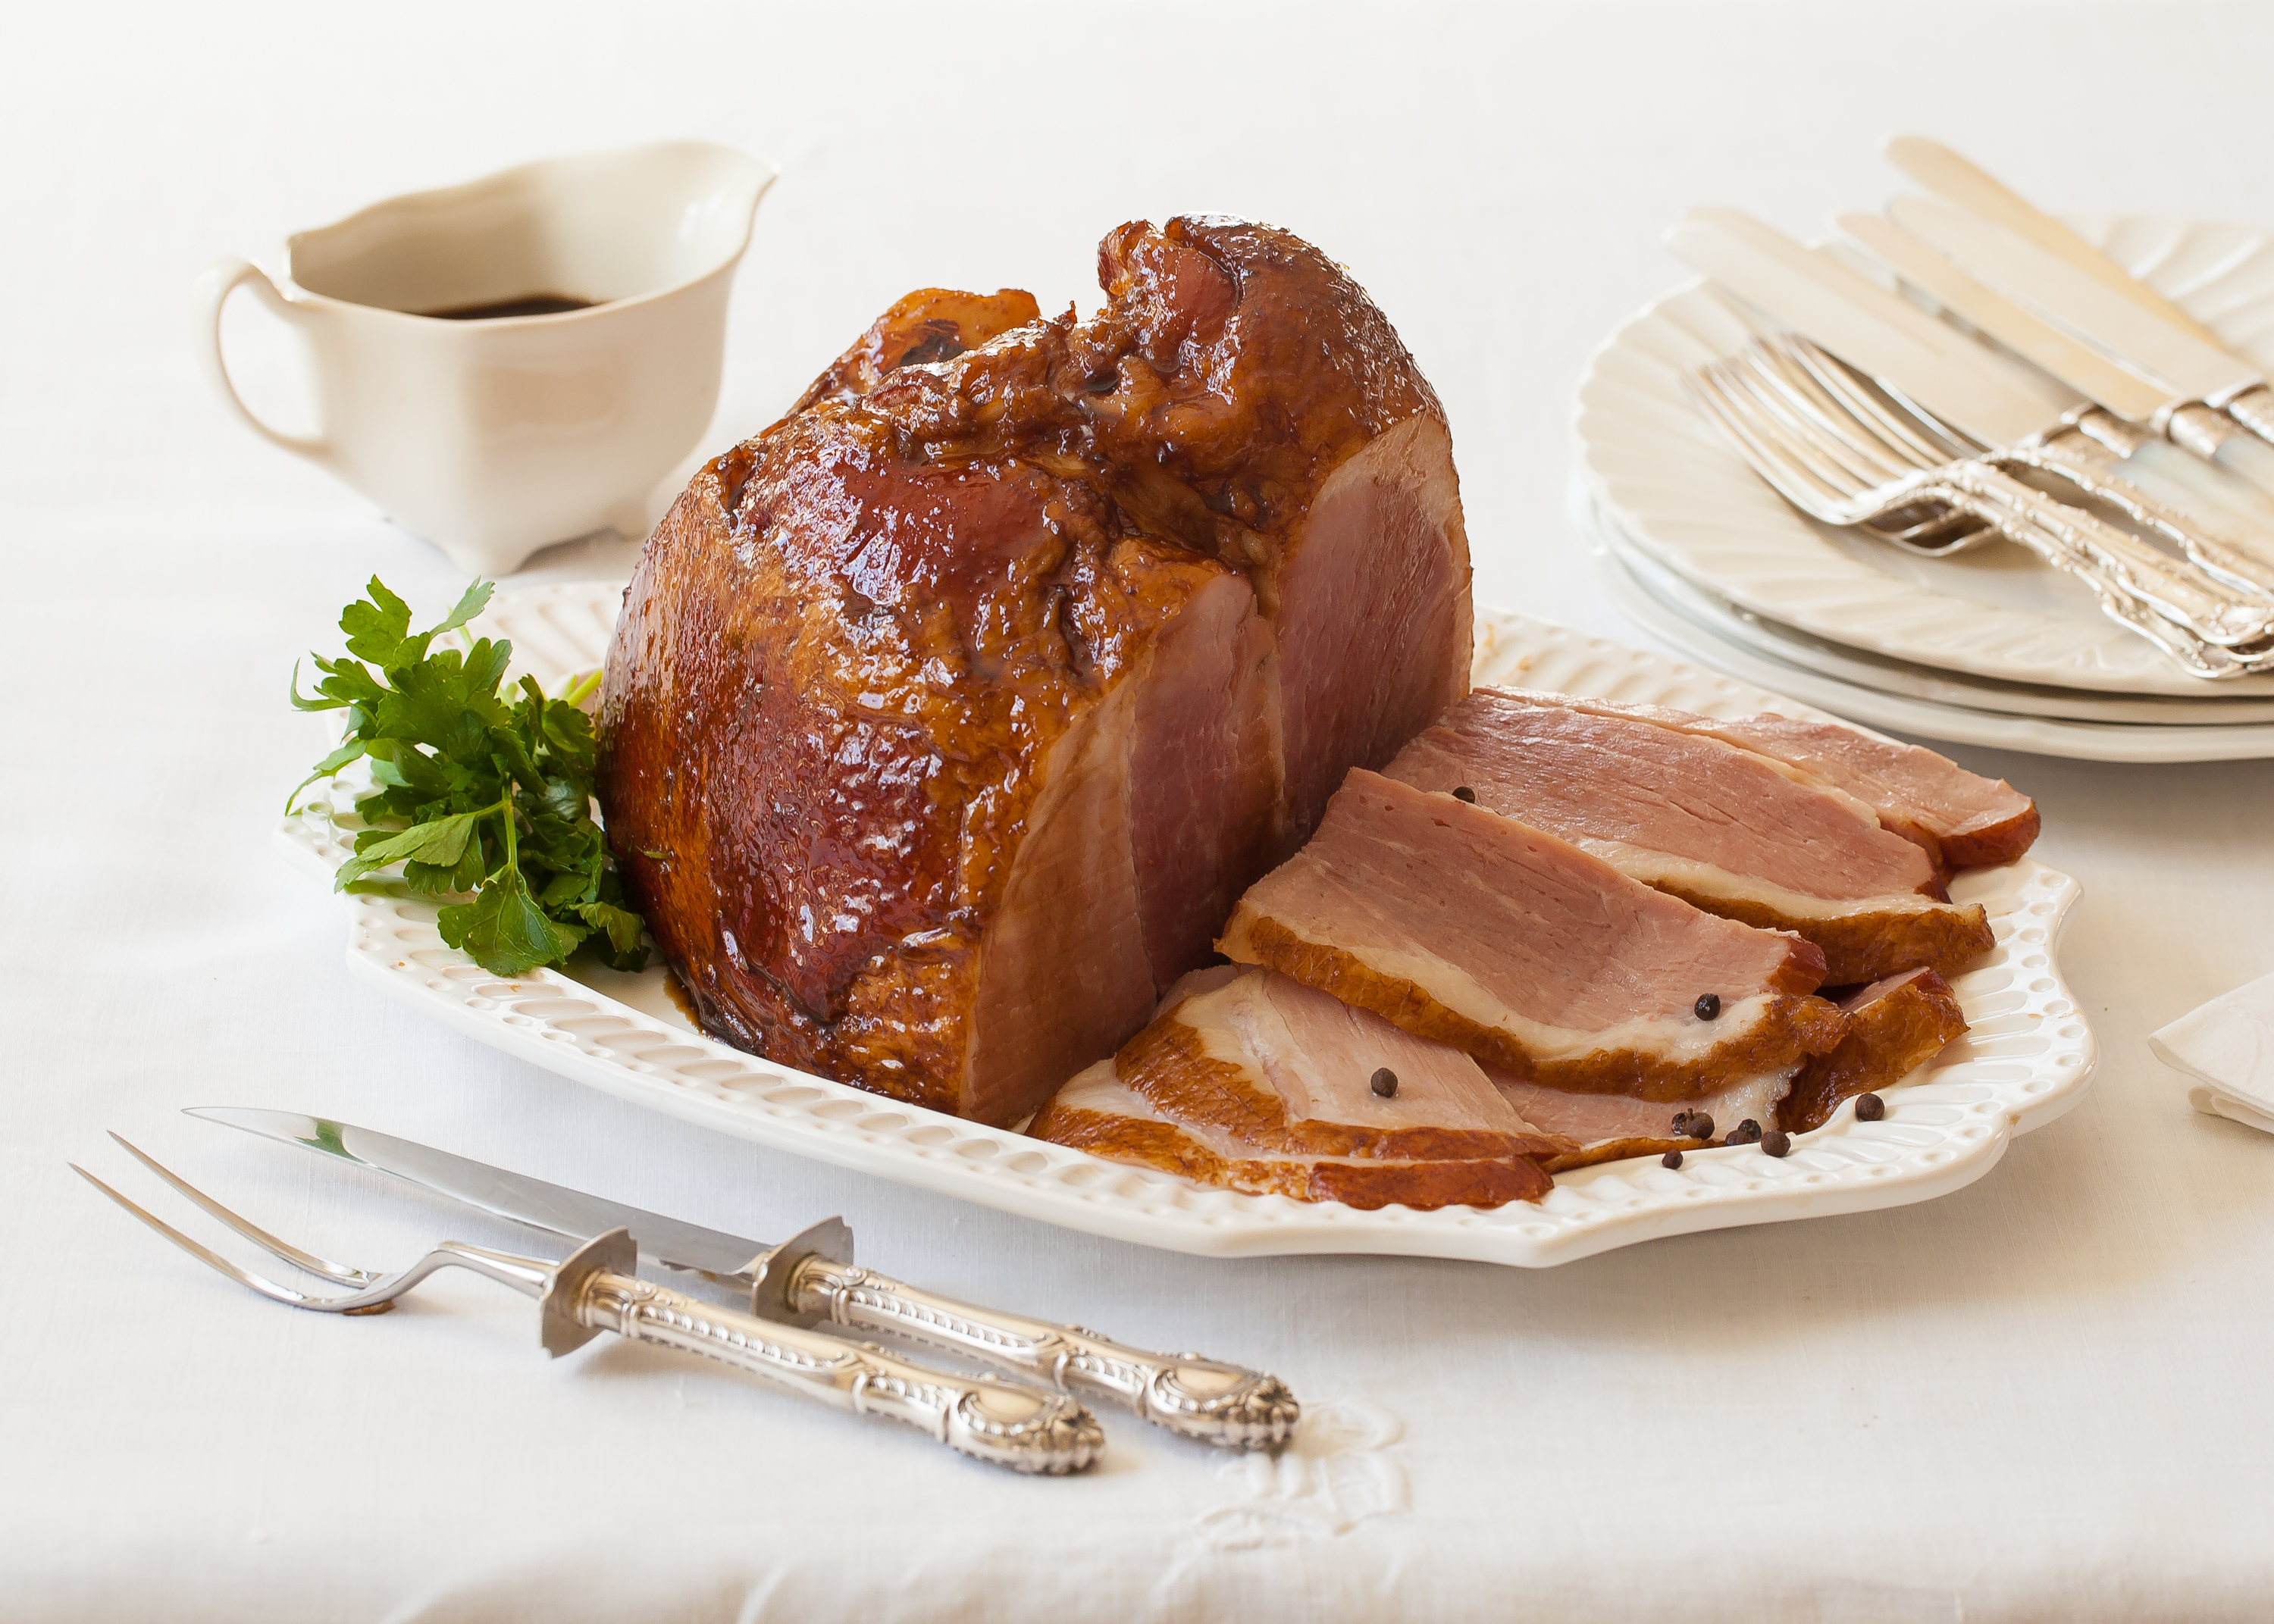 Glazed ham makes for a simple, flavorful turkey alternative.